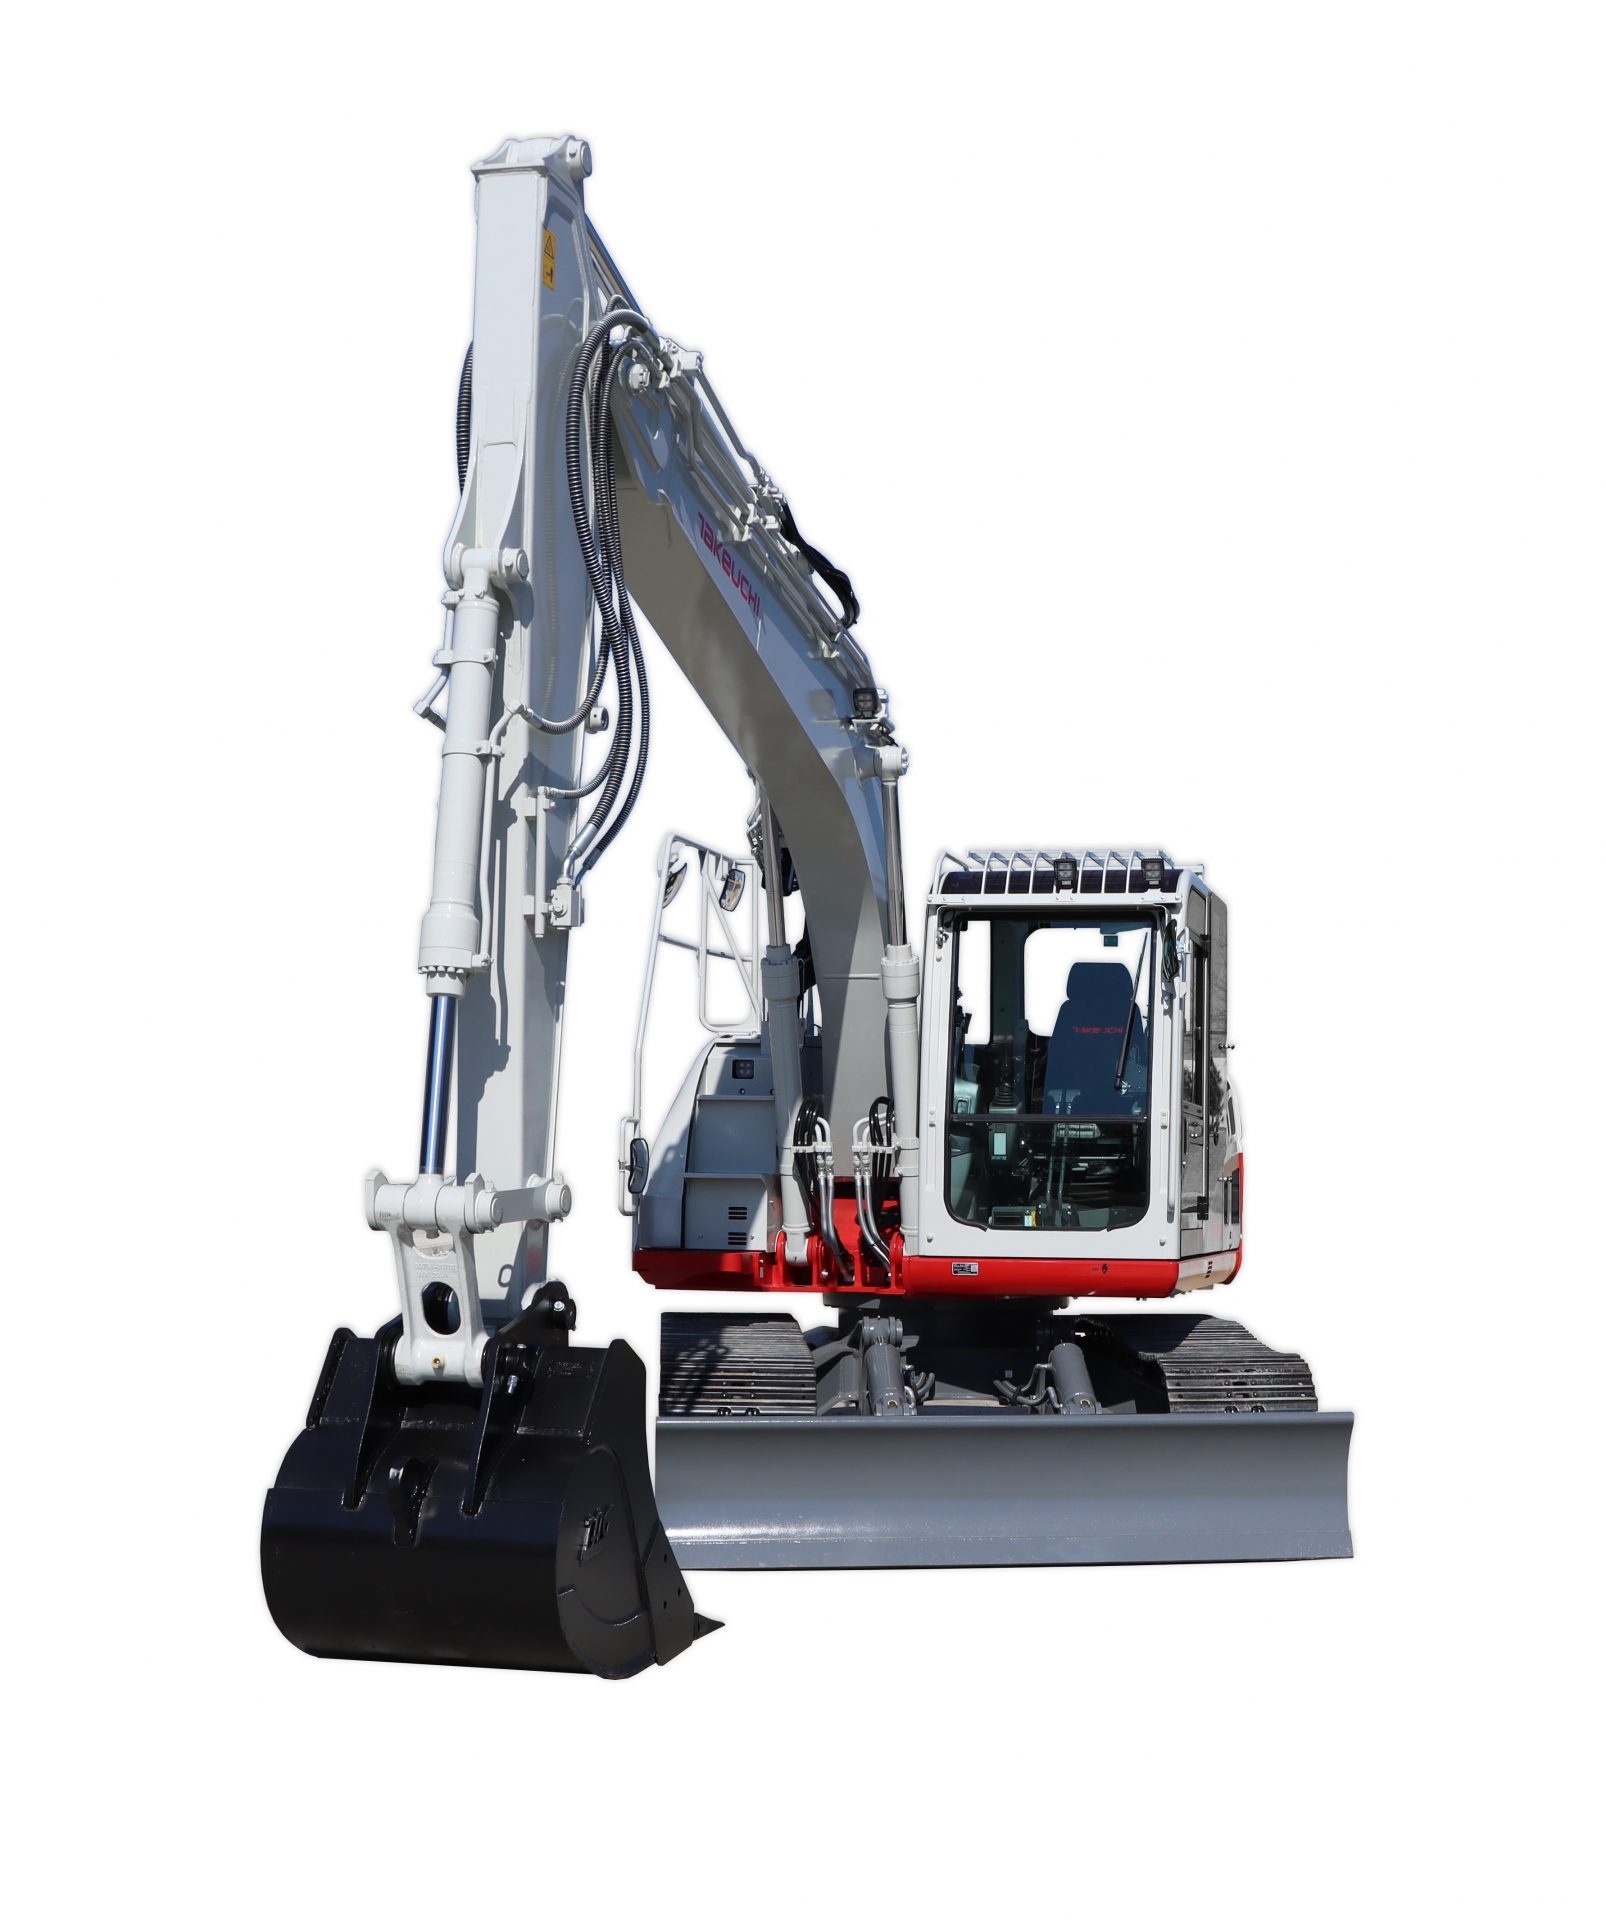 Product photo of Takeuchi's new TB2150R 15-tonne excavator.